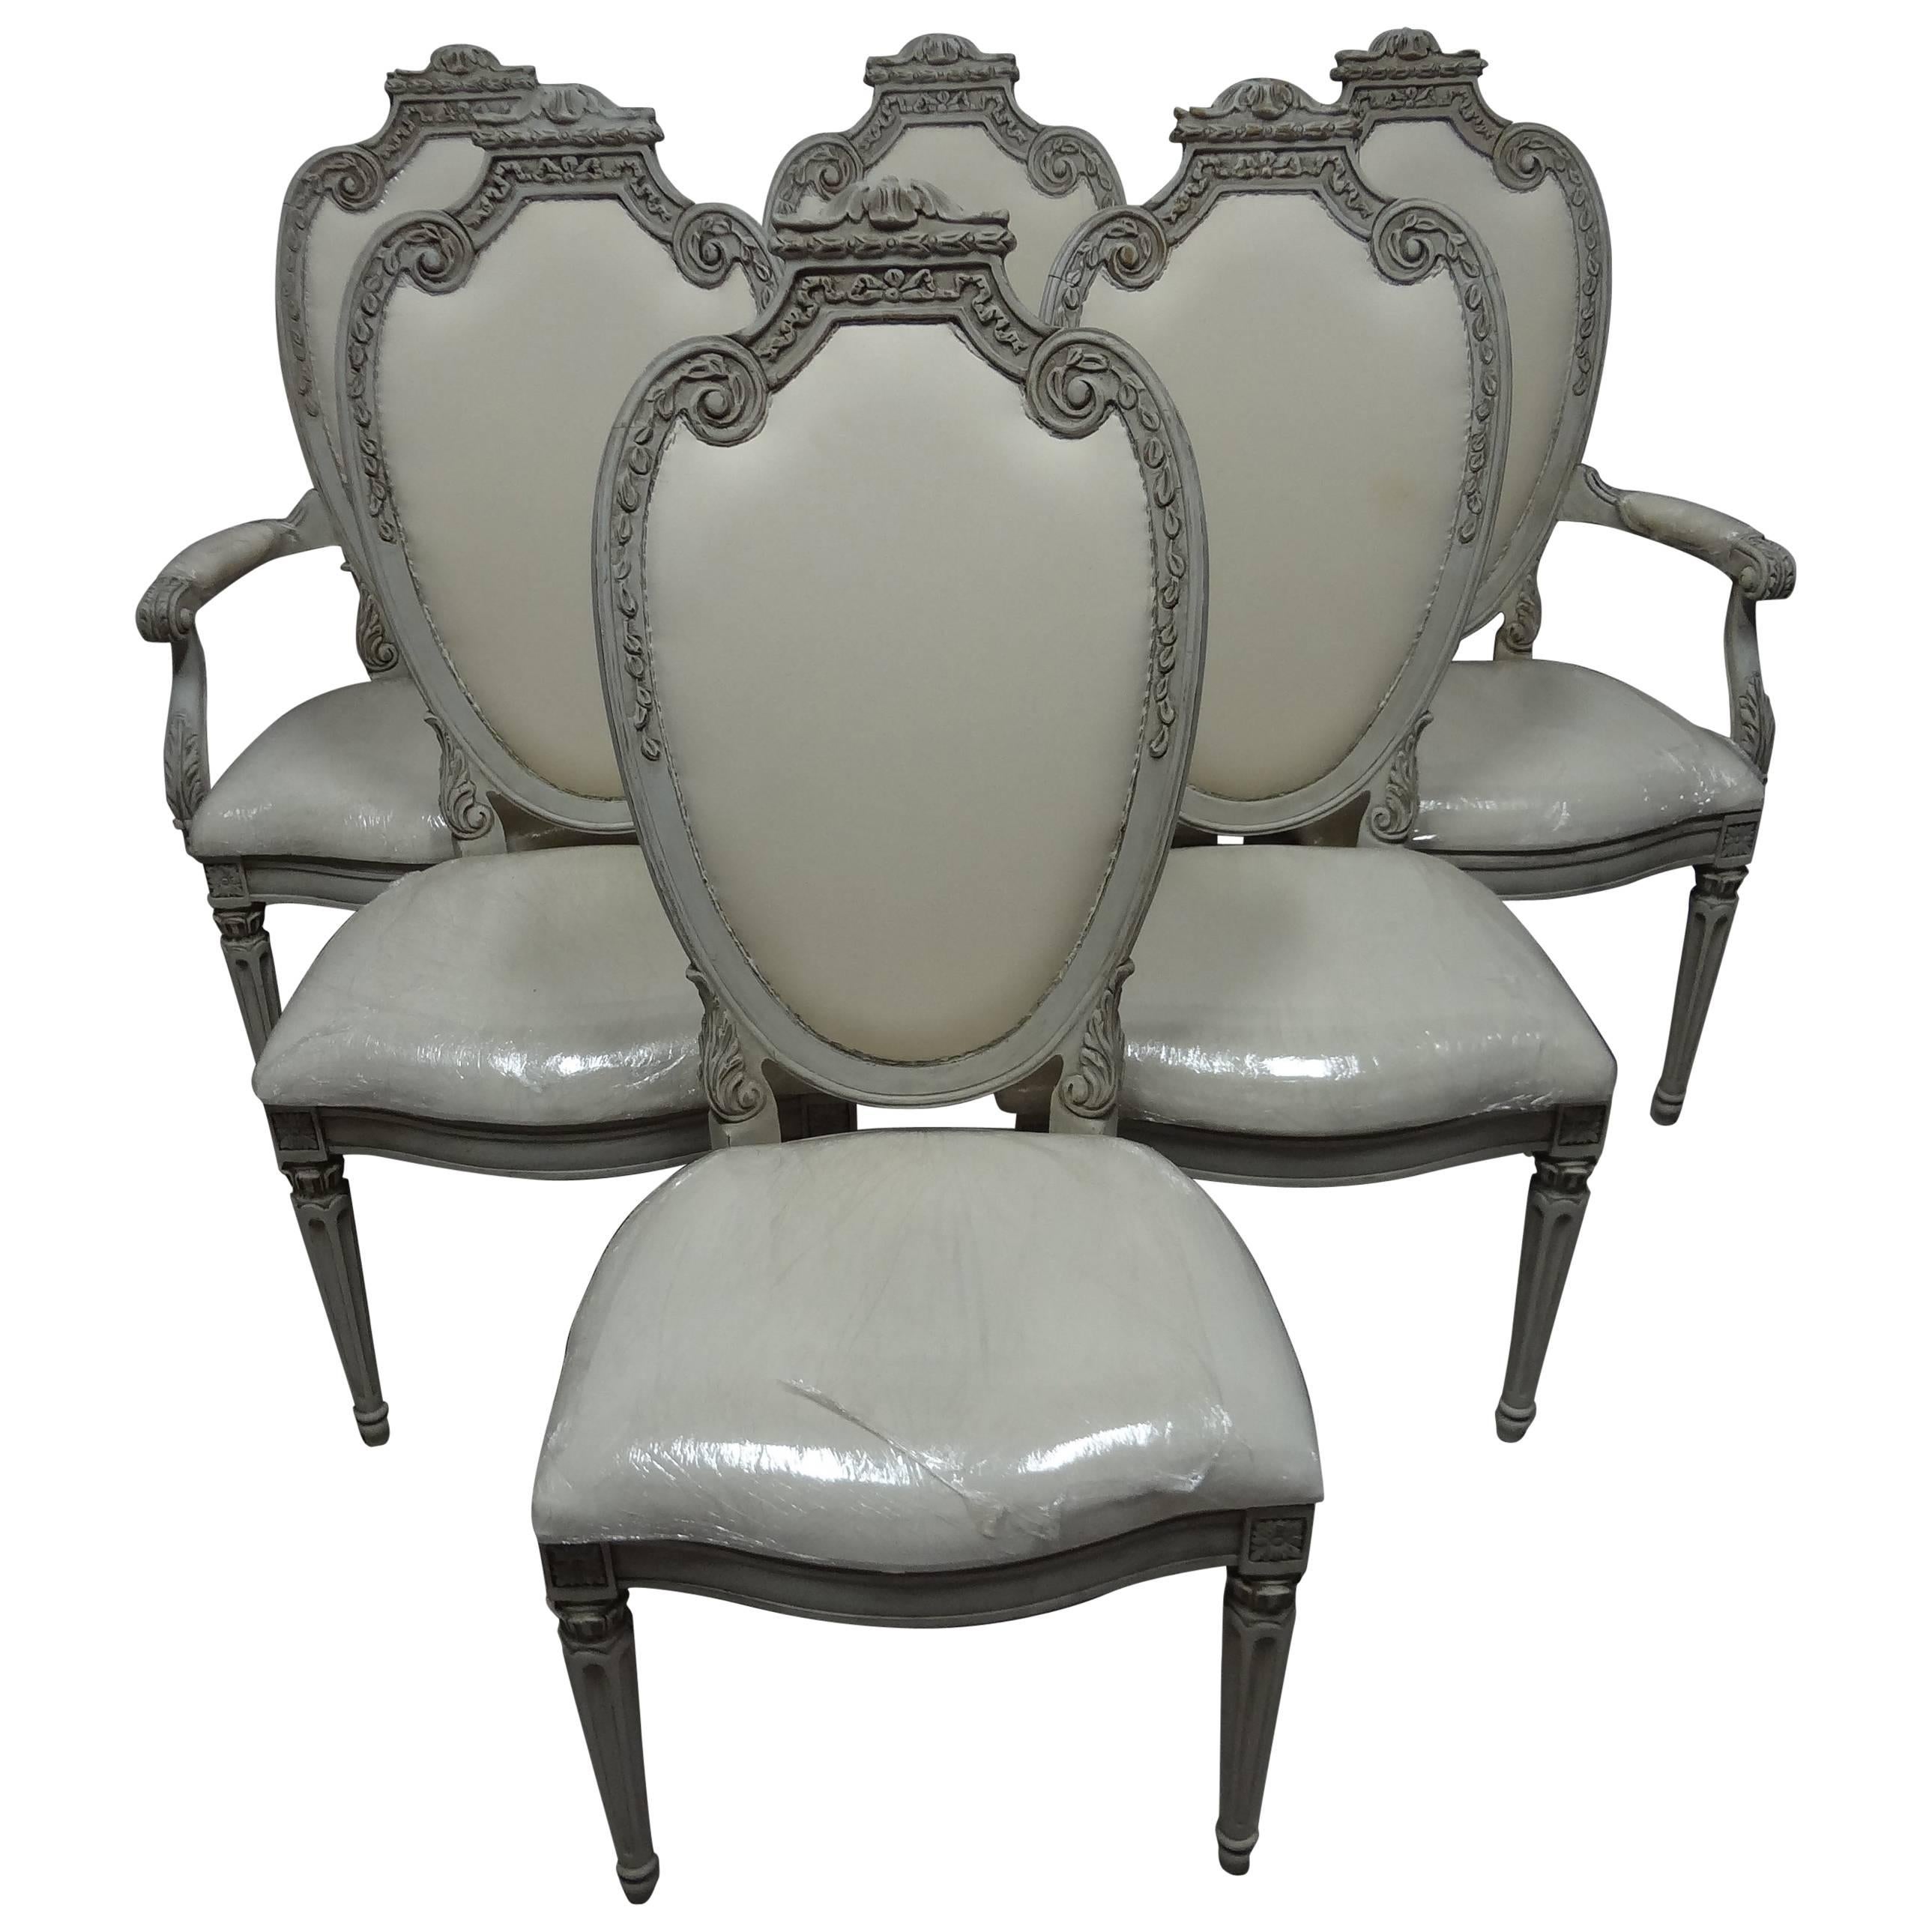 Swedish Gustavian Dining Chairs